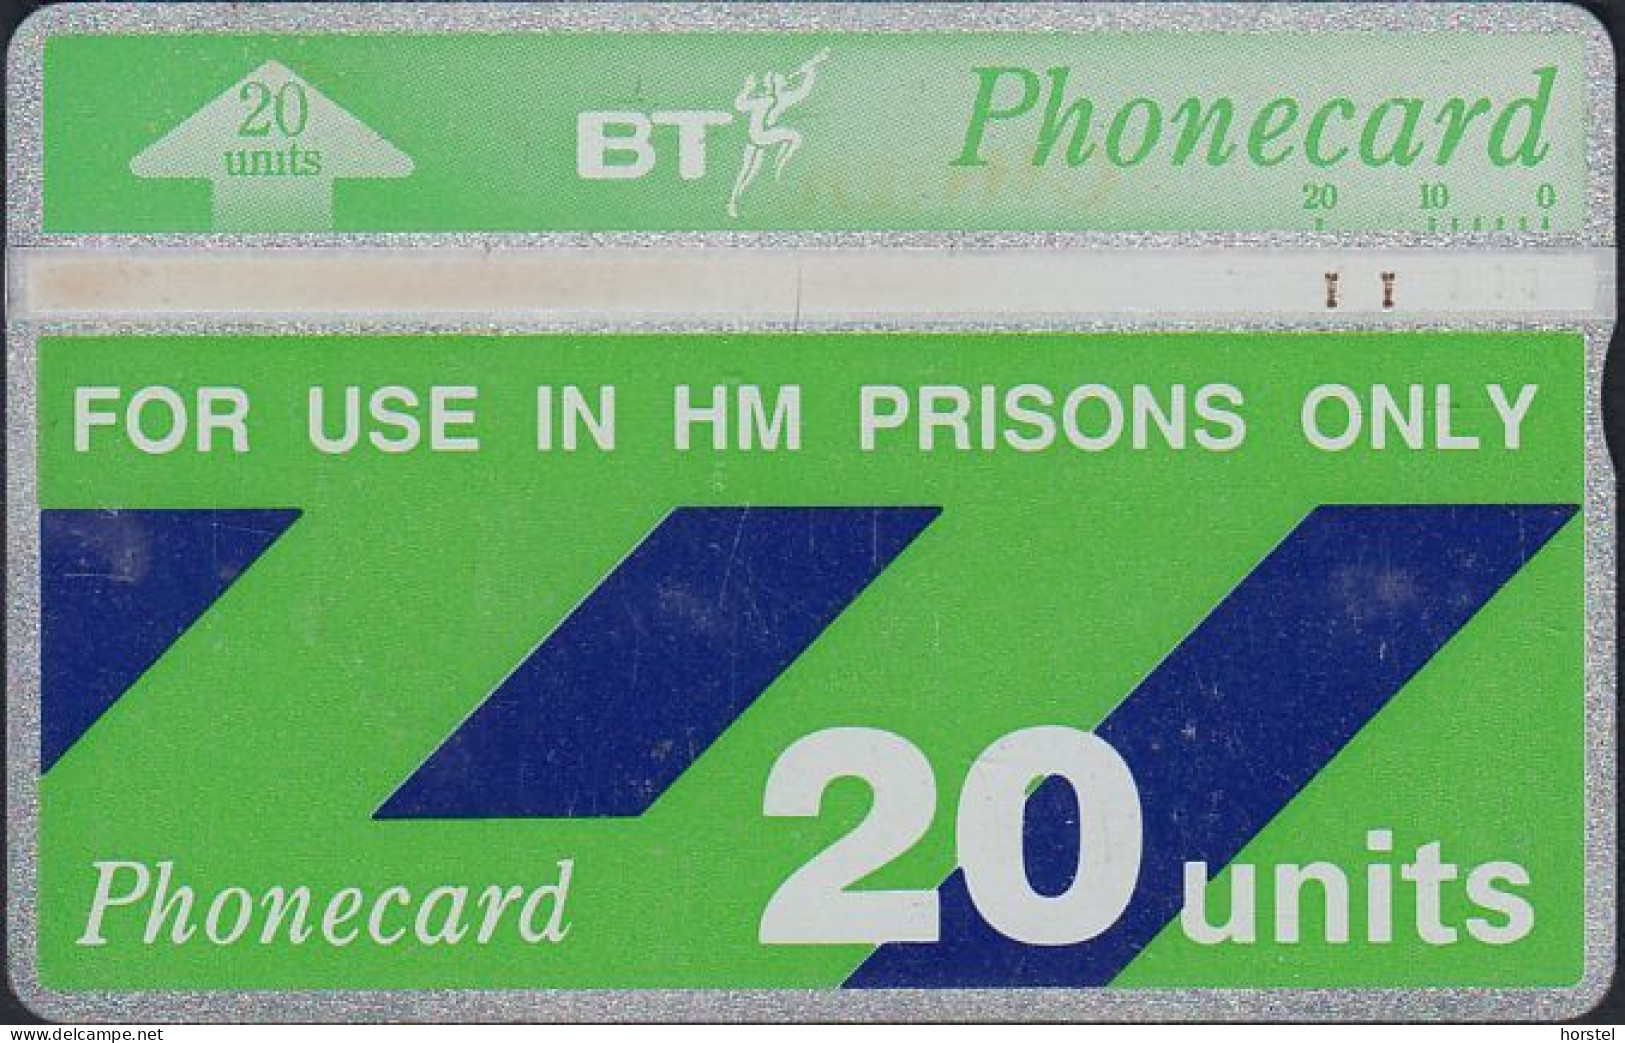 UK - British Telecom L&G H.M. Prison Card CUP005  (212F)  20 Units - [ 3] Haftanstalten